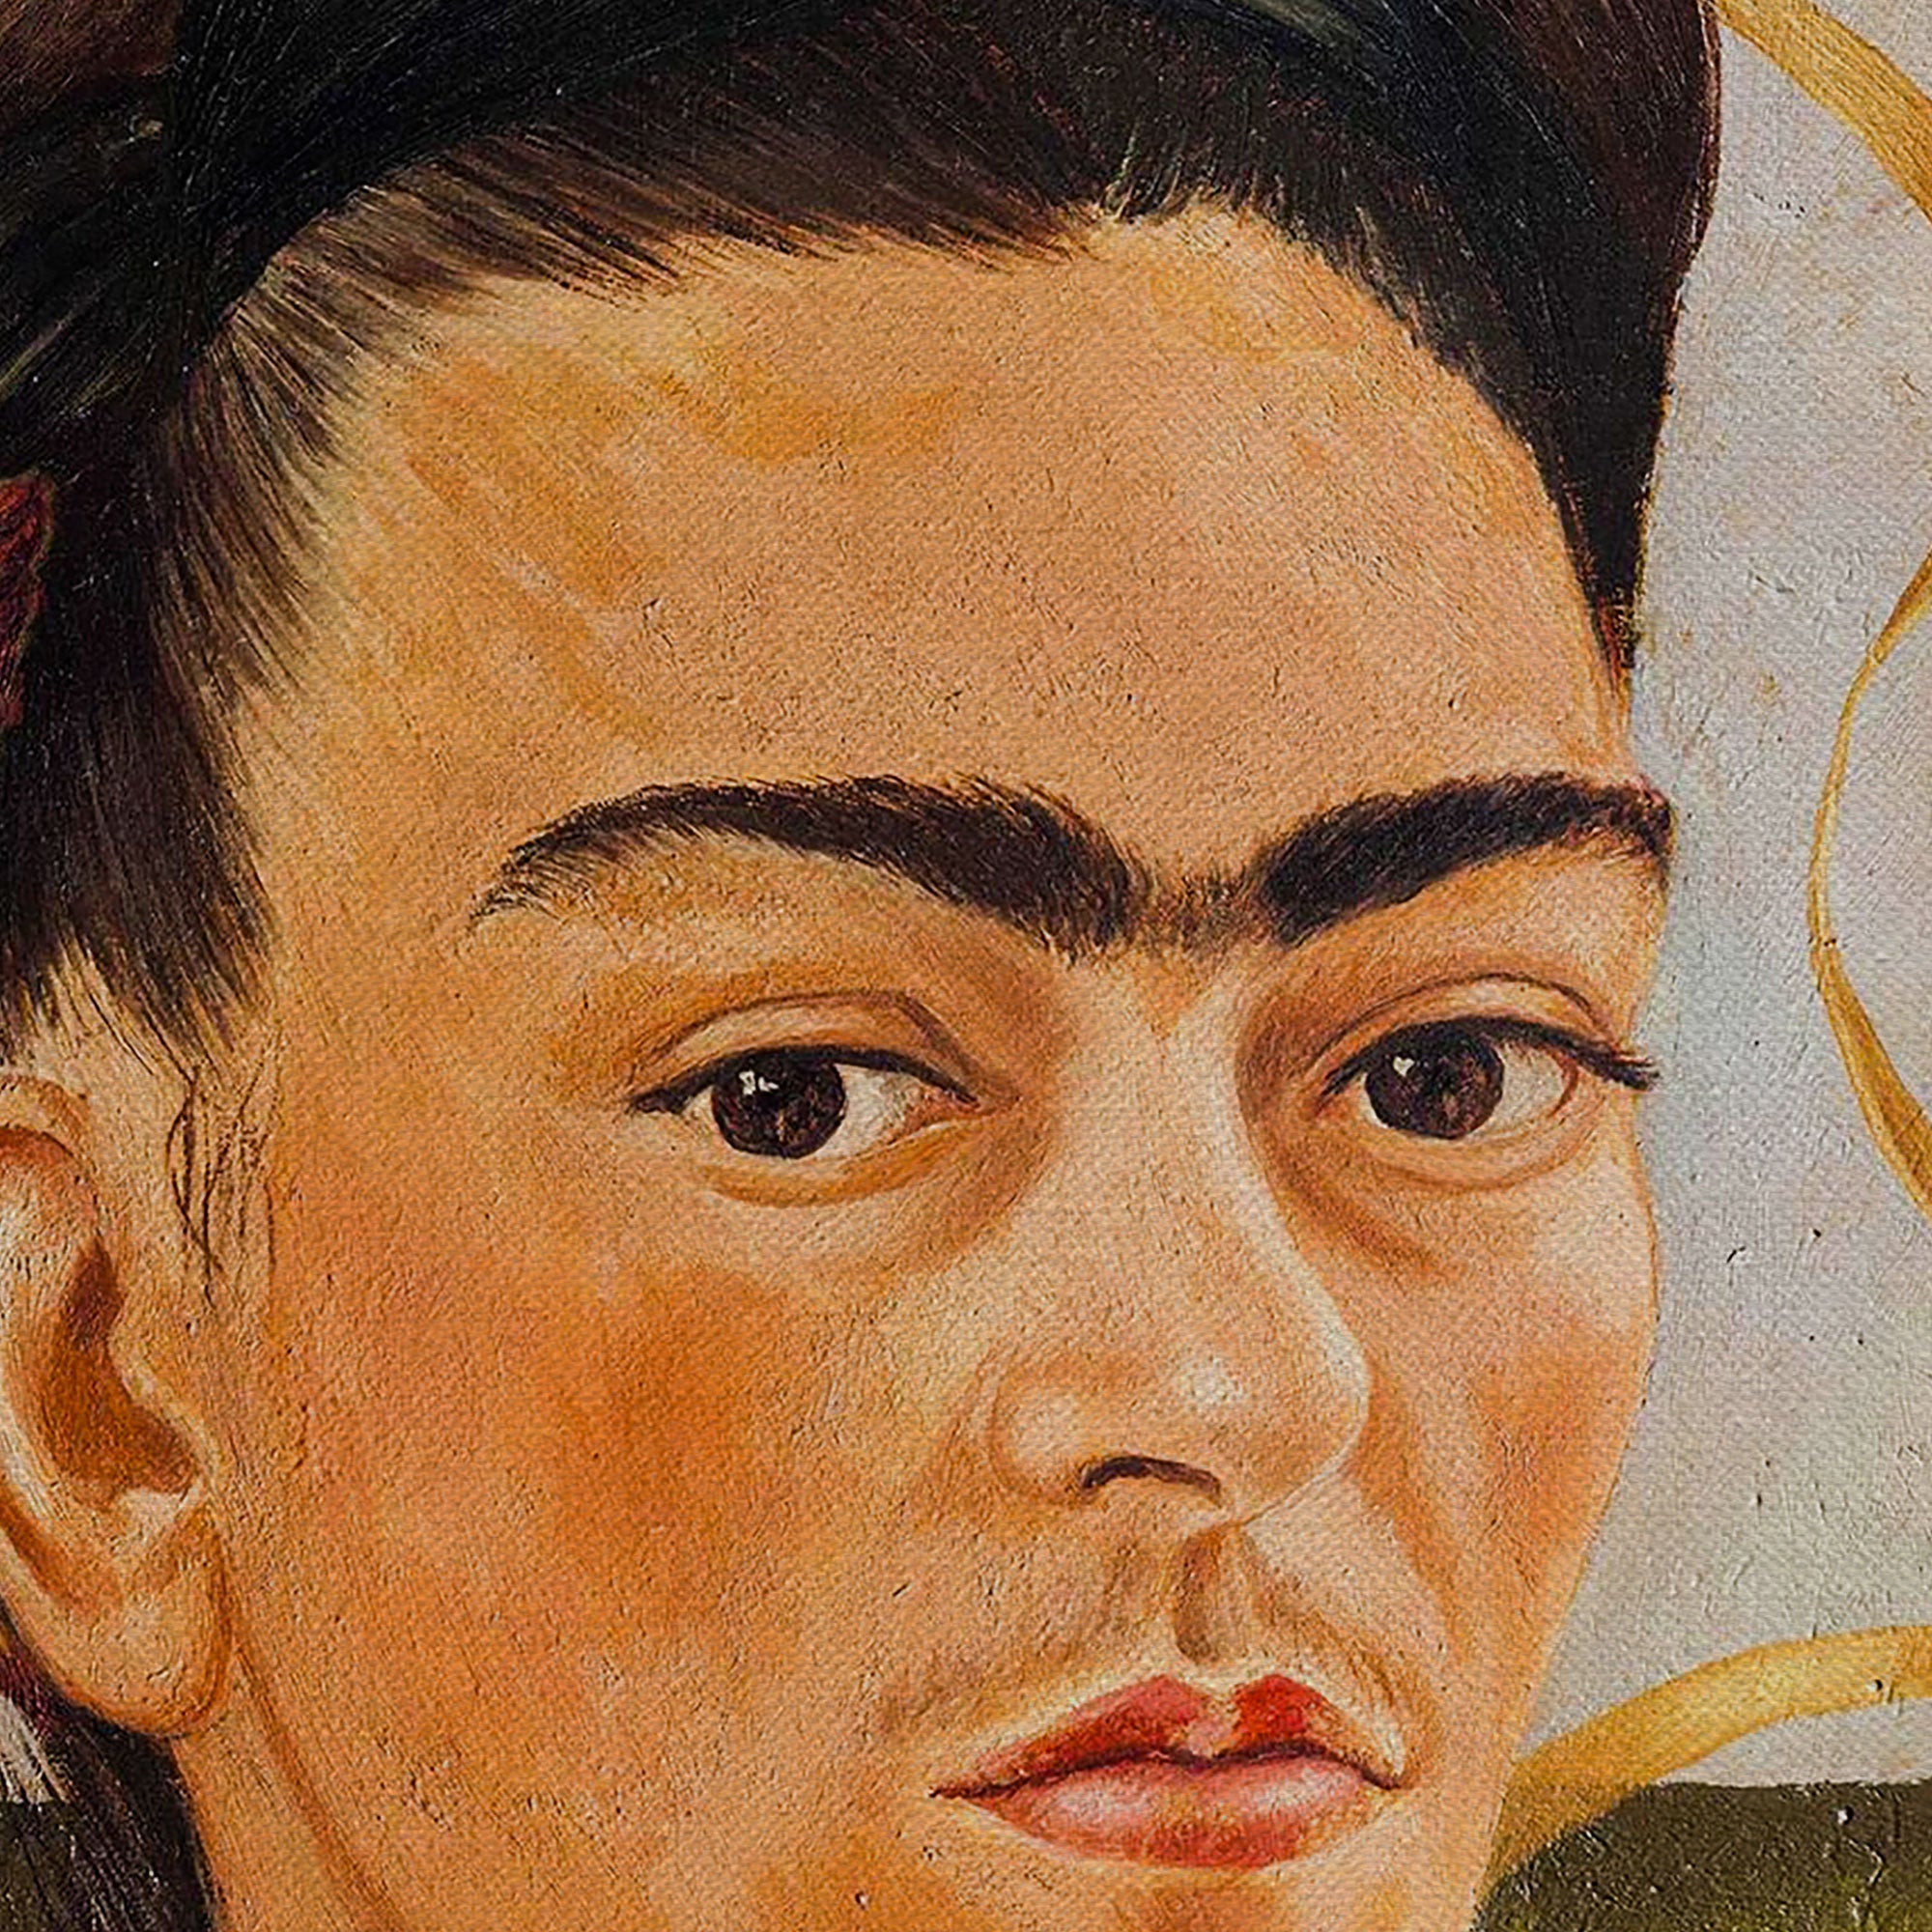 Frida Kahlo Self Portrait With Small Monkey Canvas Wall Art